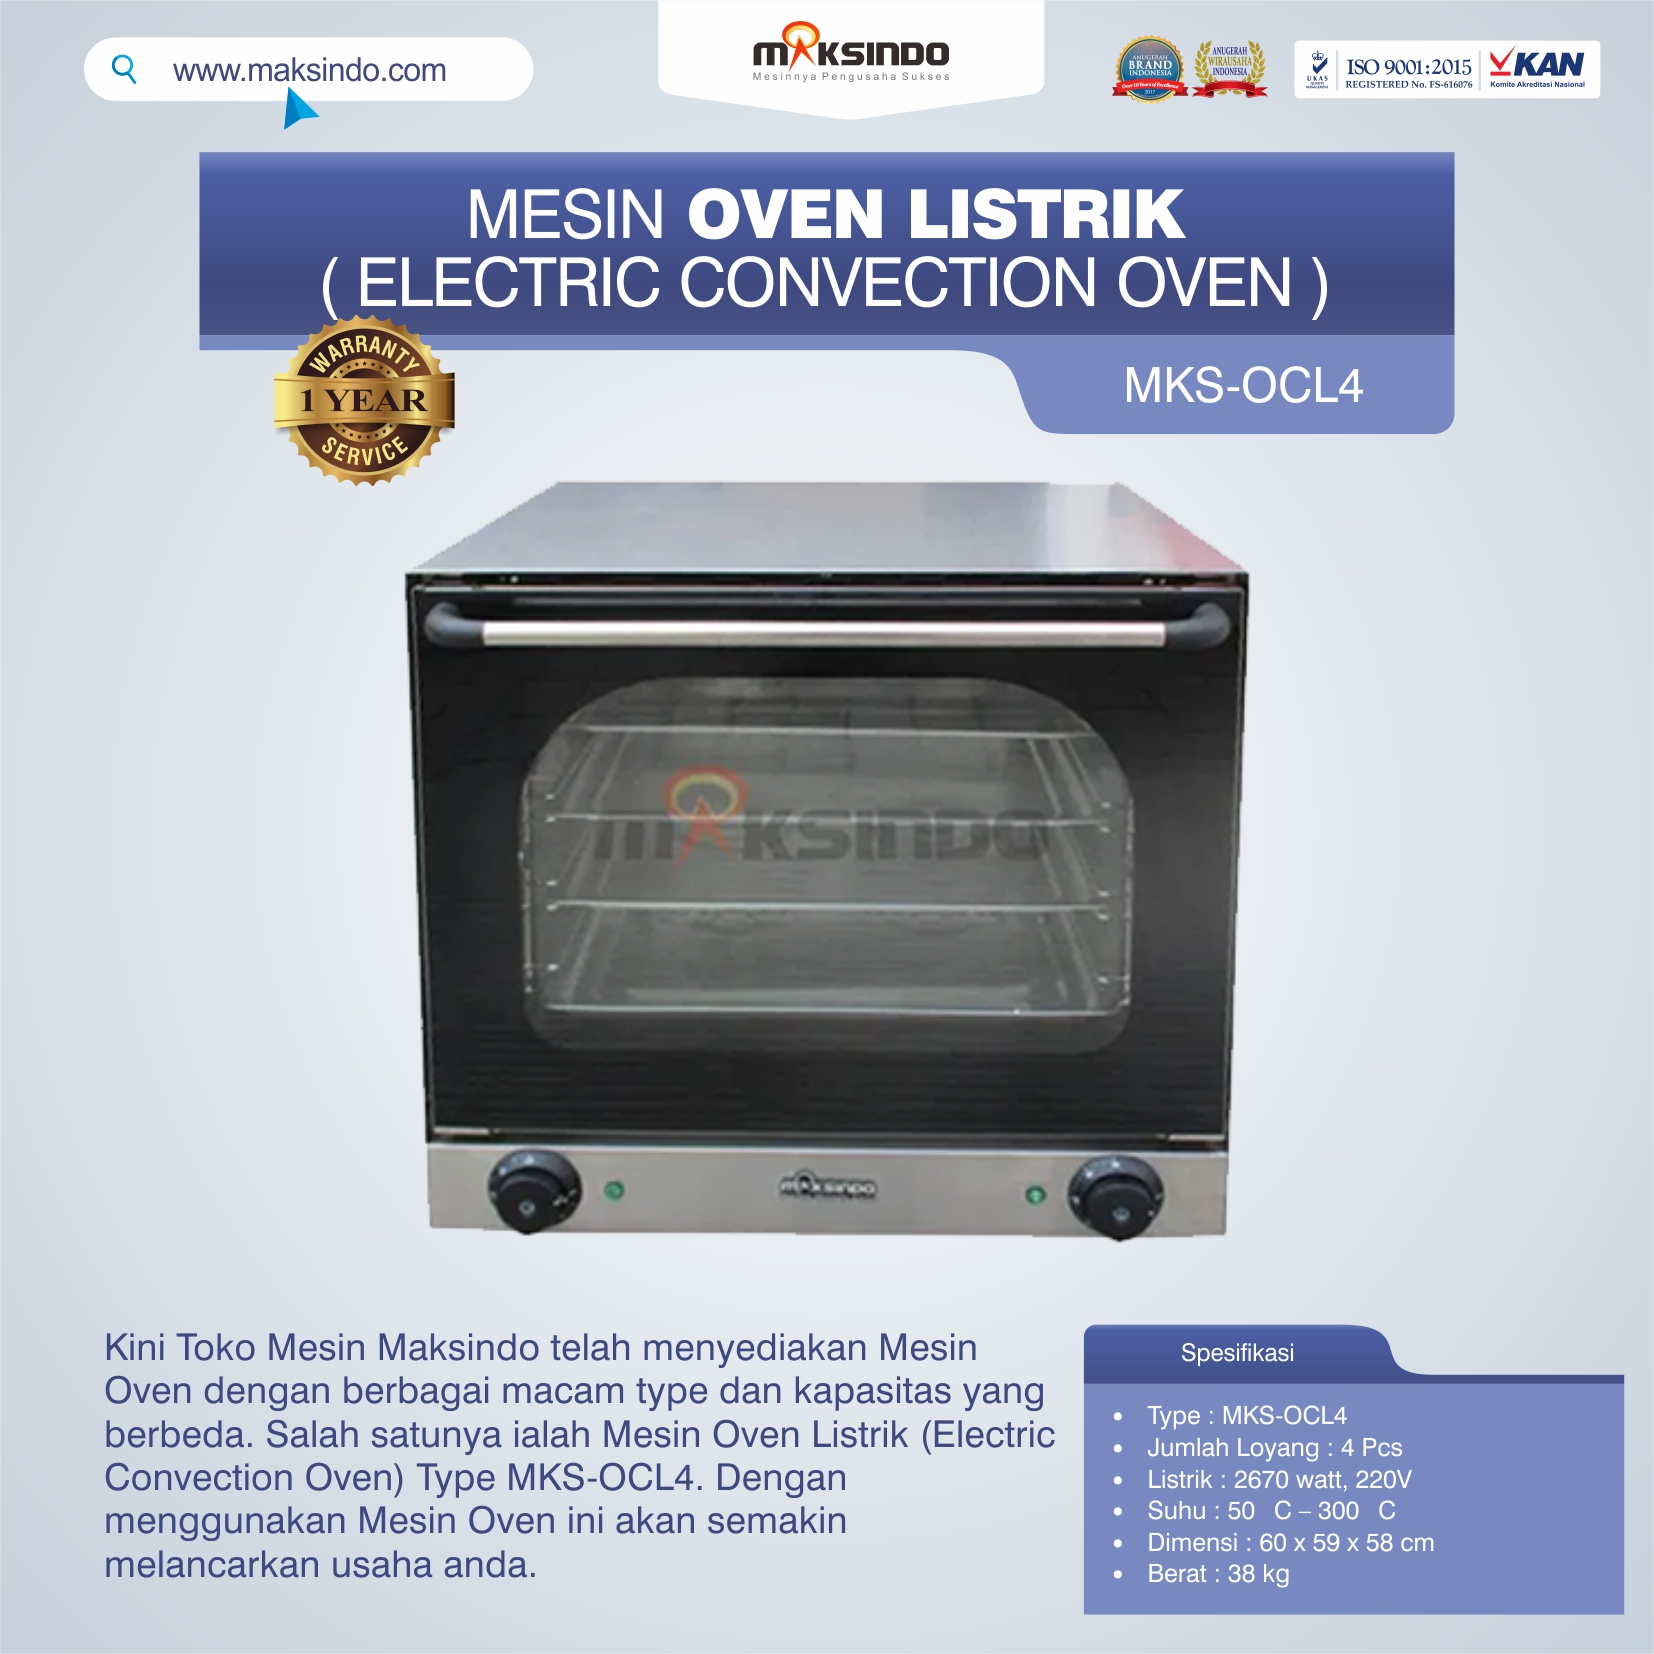 Jual Mesin Oven Listrik (Electric Convection Oven) MKS-OCL4 di Jakarta